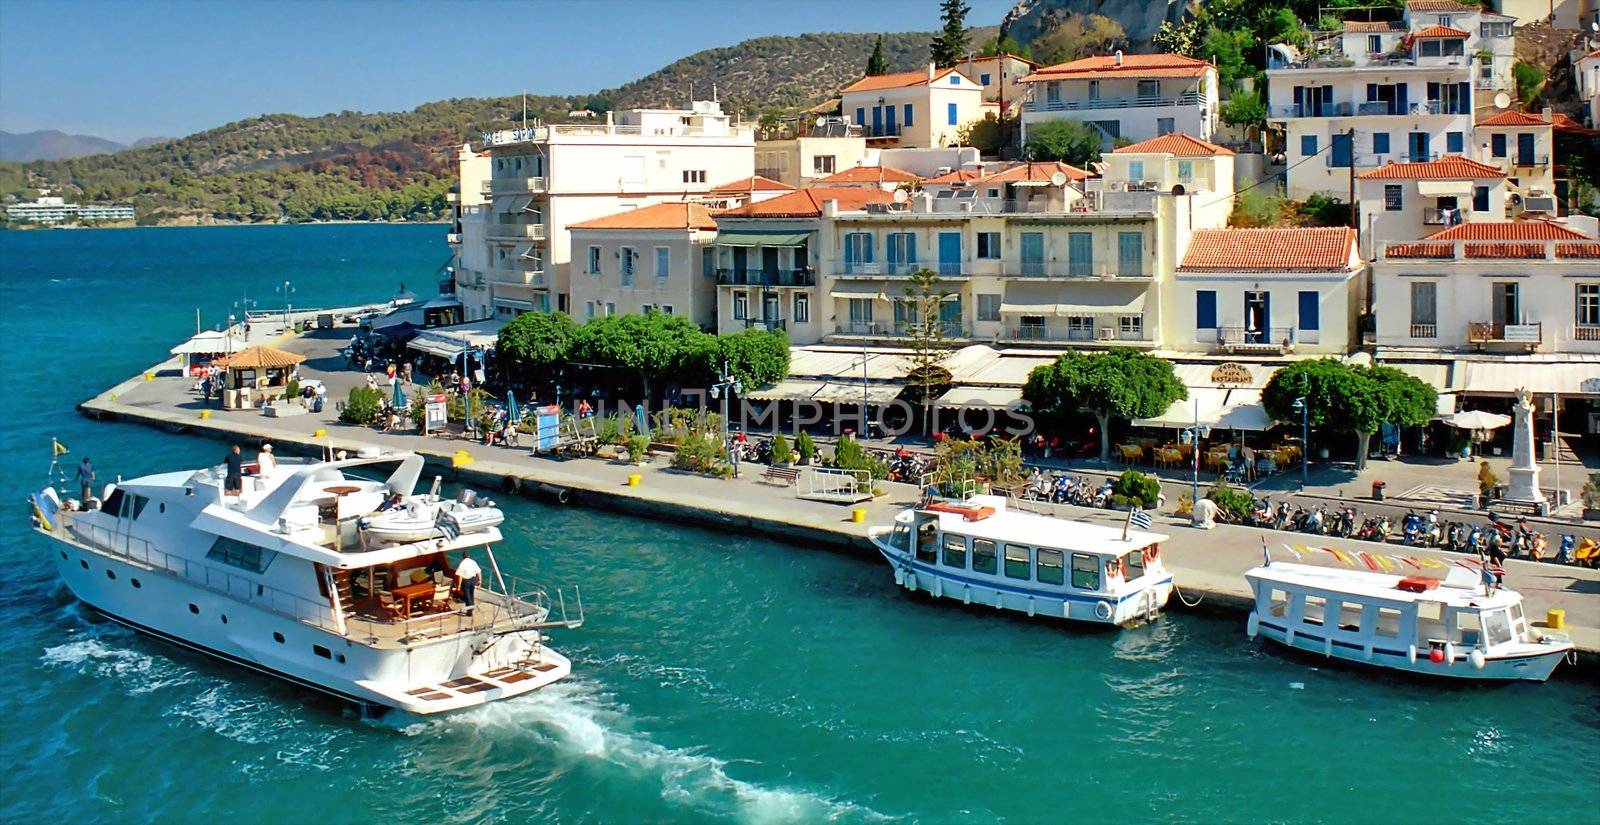 Yacht is doubling town quay in Greek island